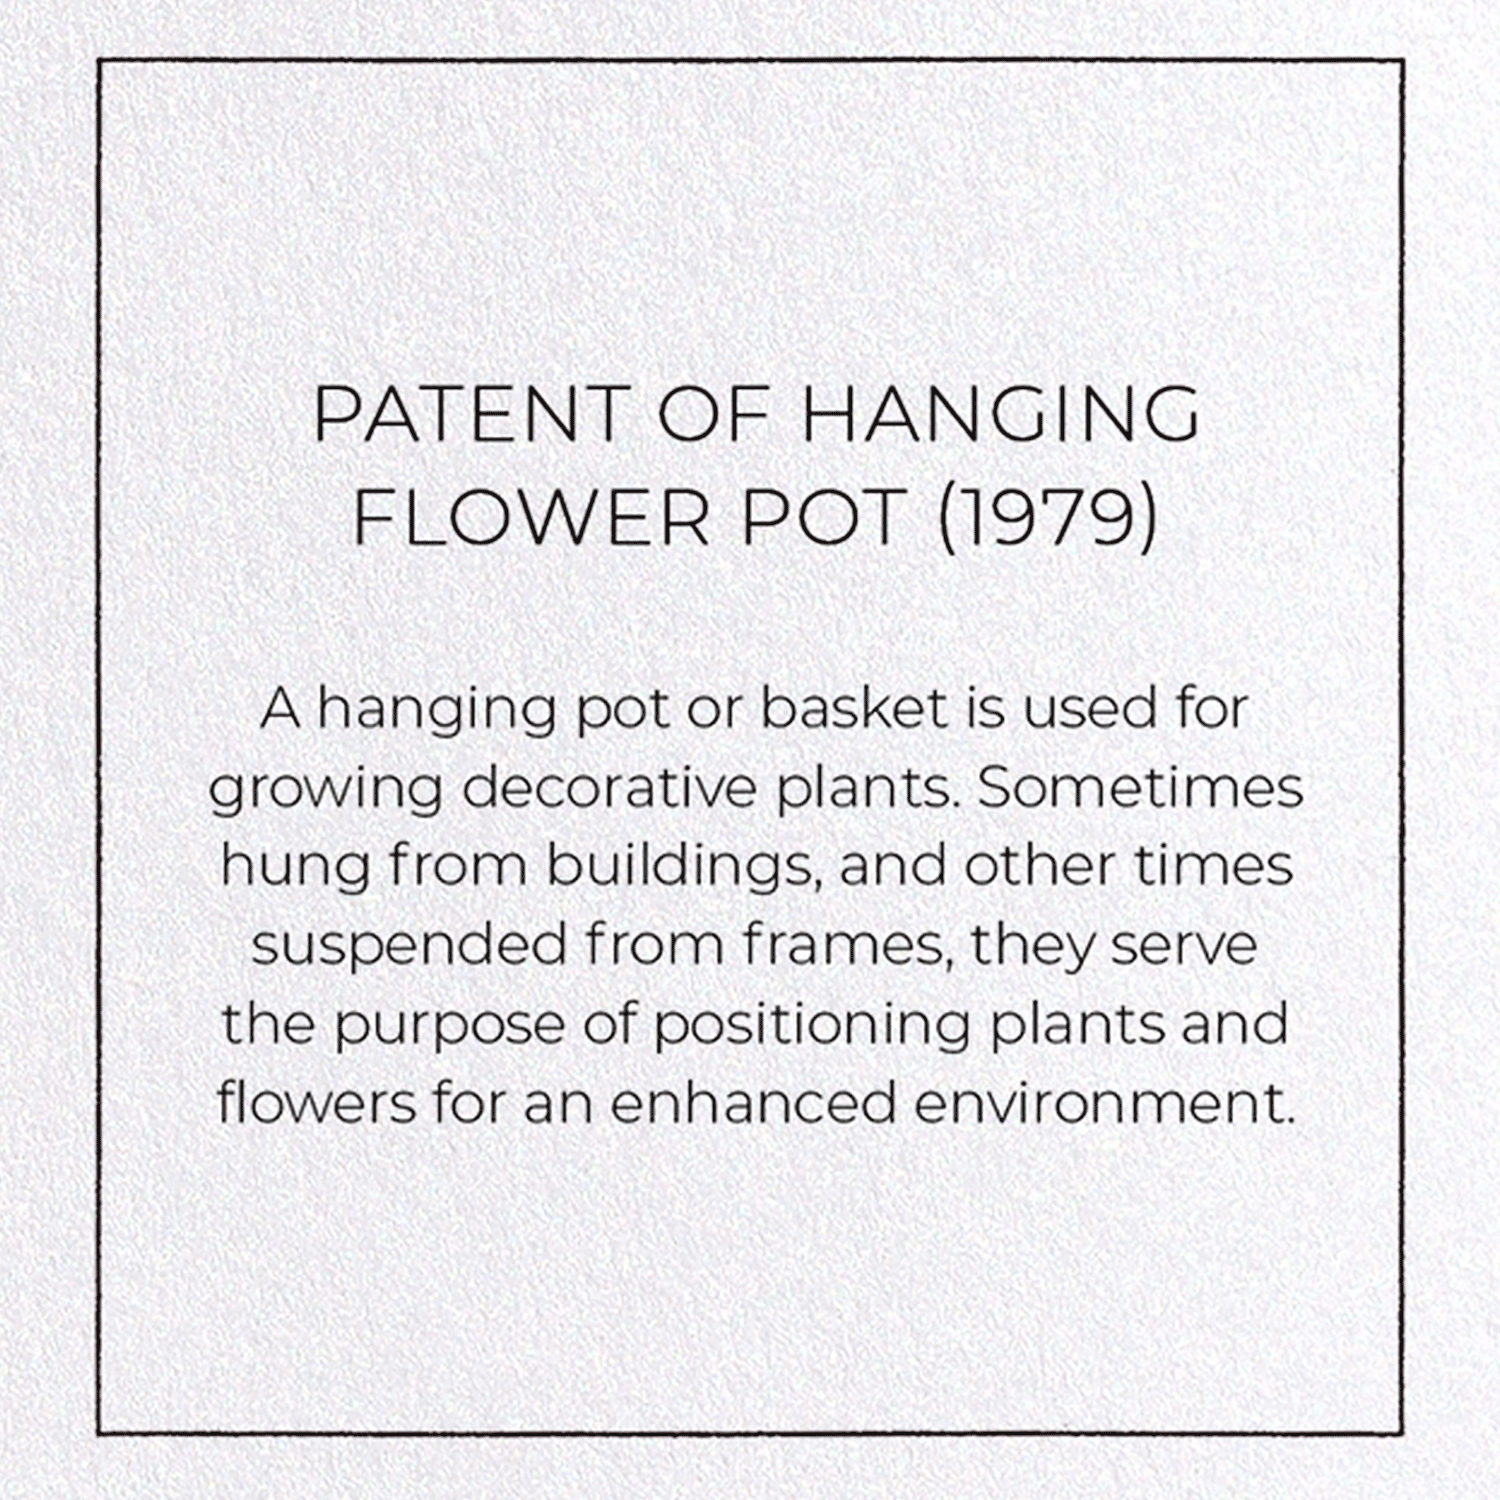 PATENT OF HANGING FLOWER POT (1979)